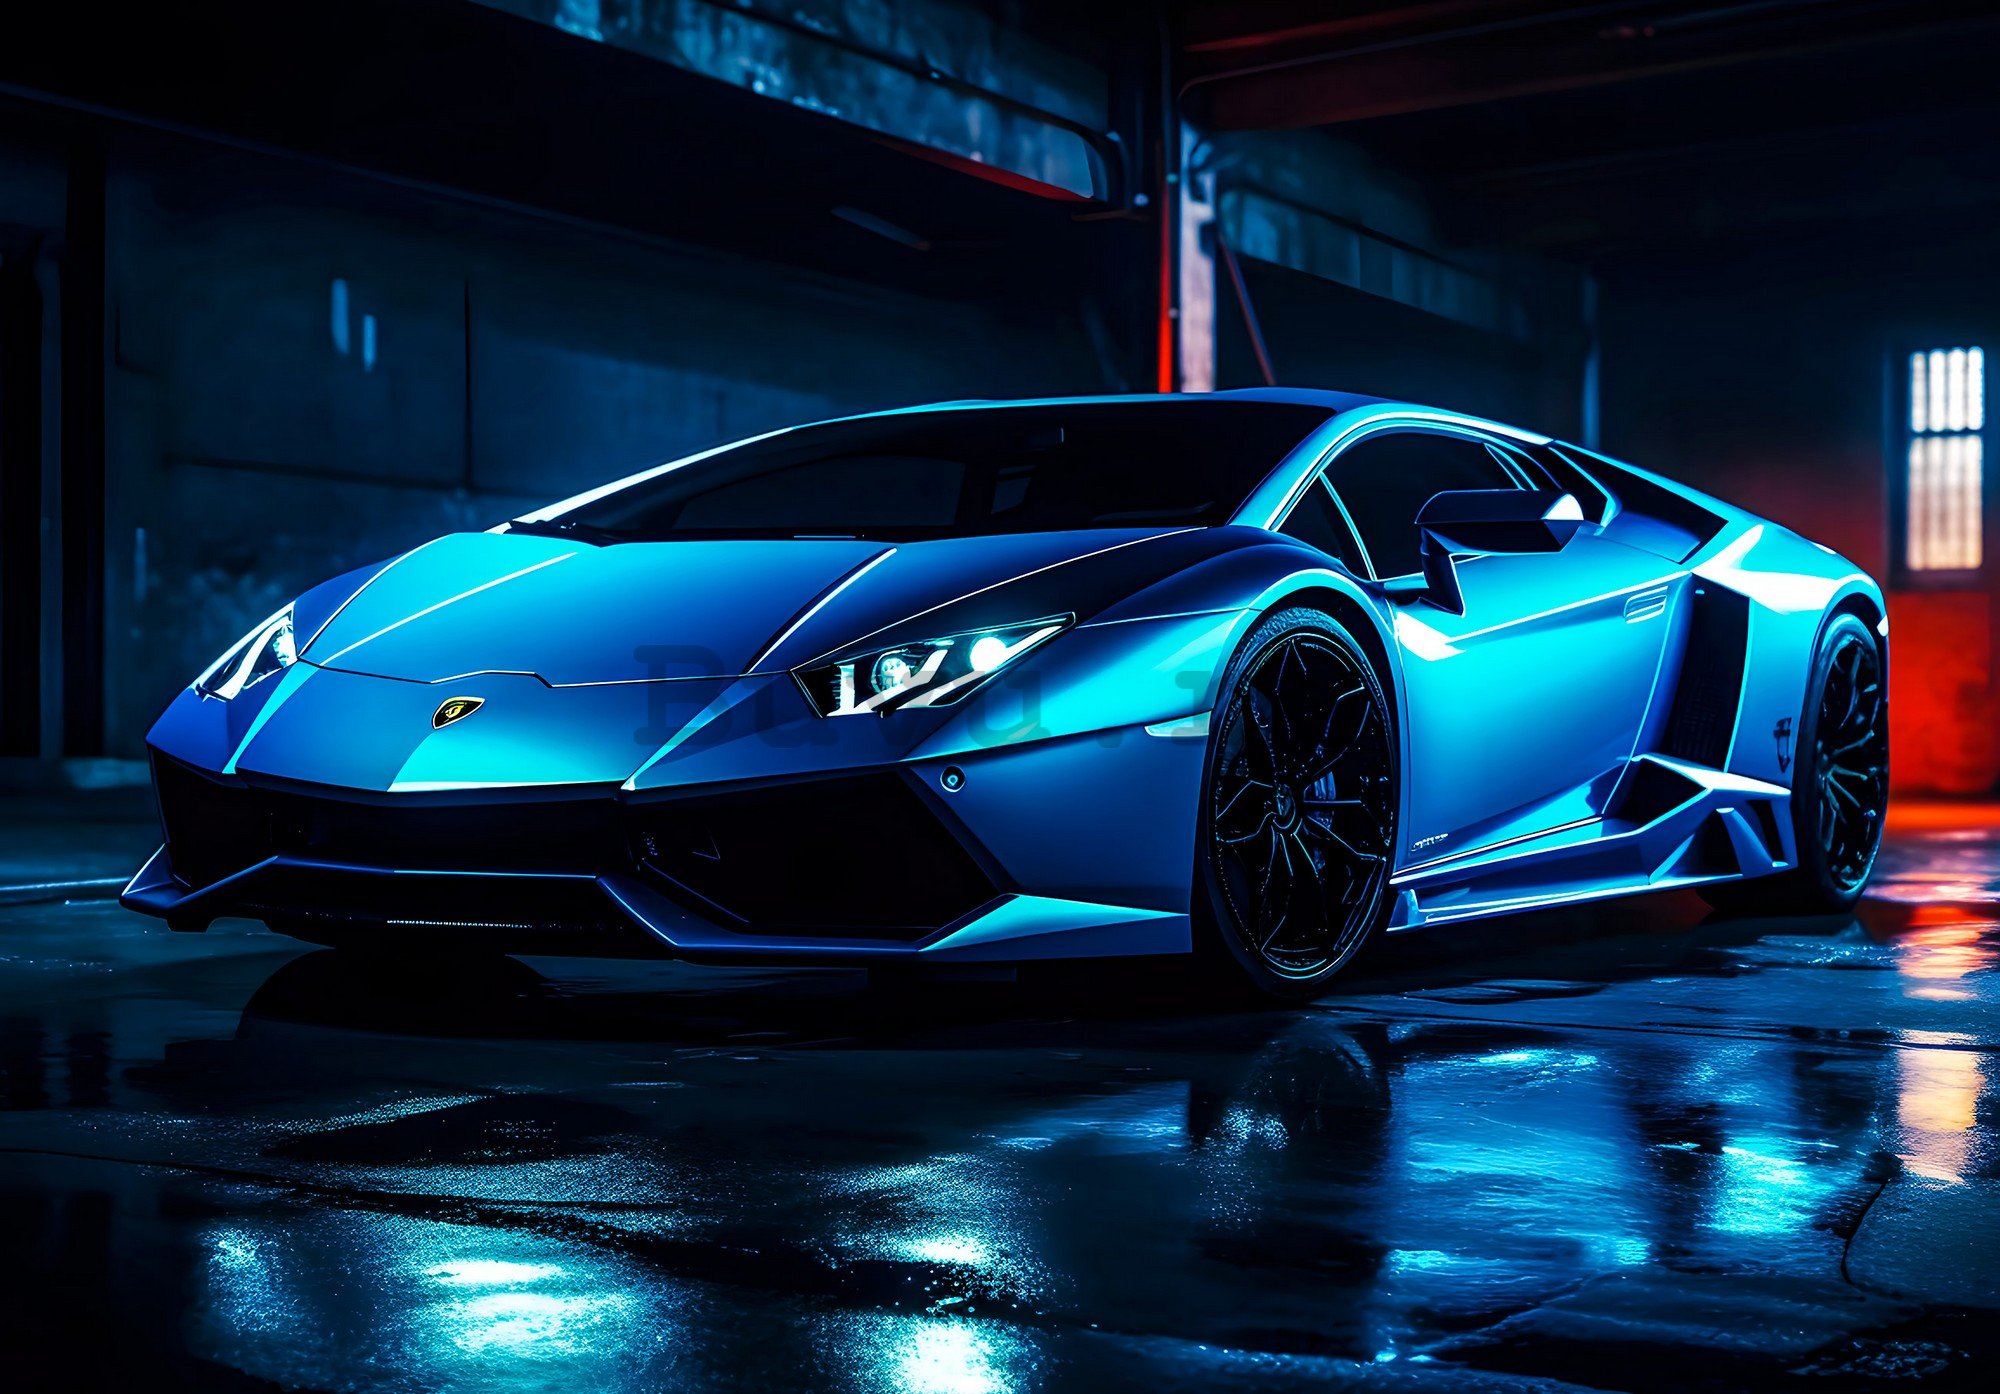 Fototapet vlies: Car Lamborghini luxurious neon (1) - 254x184 cm